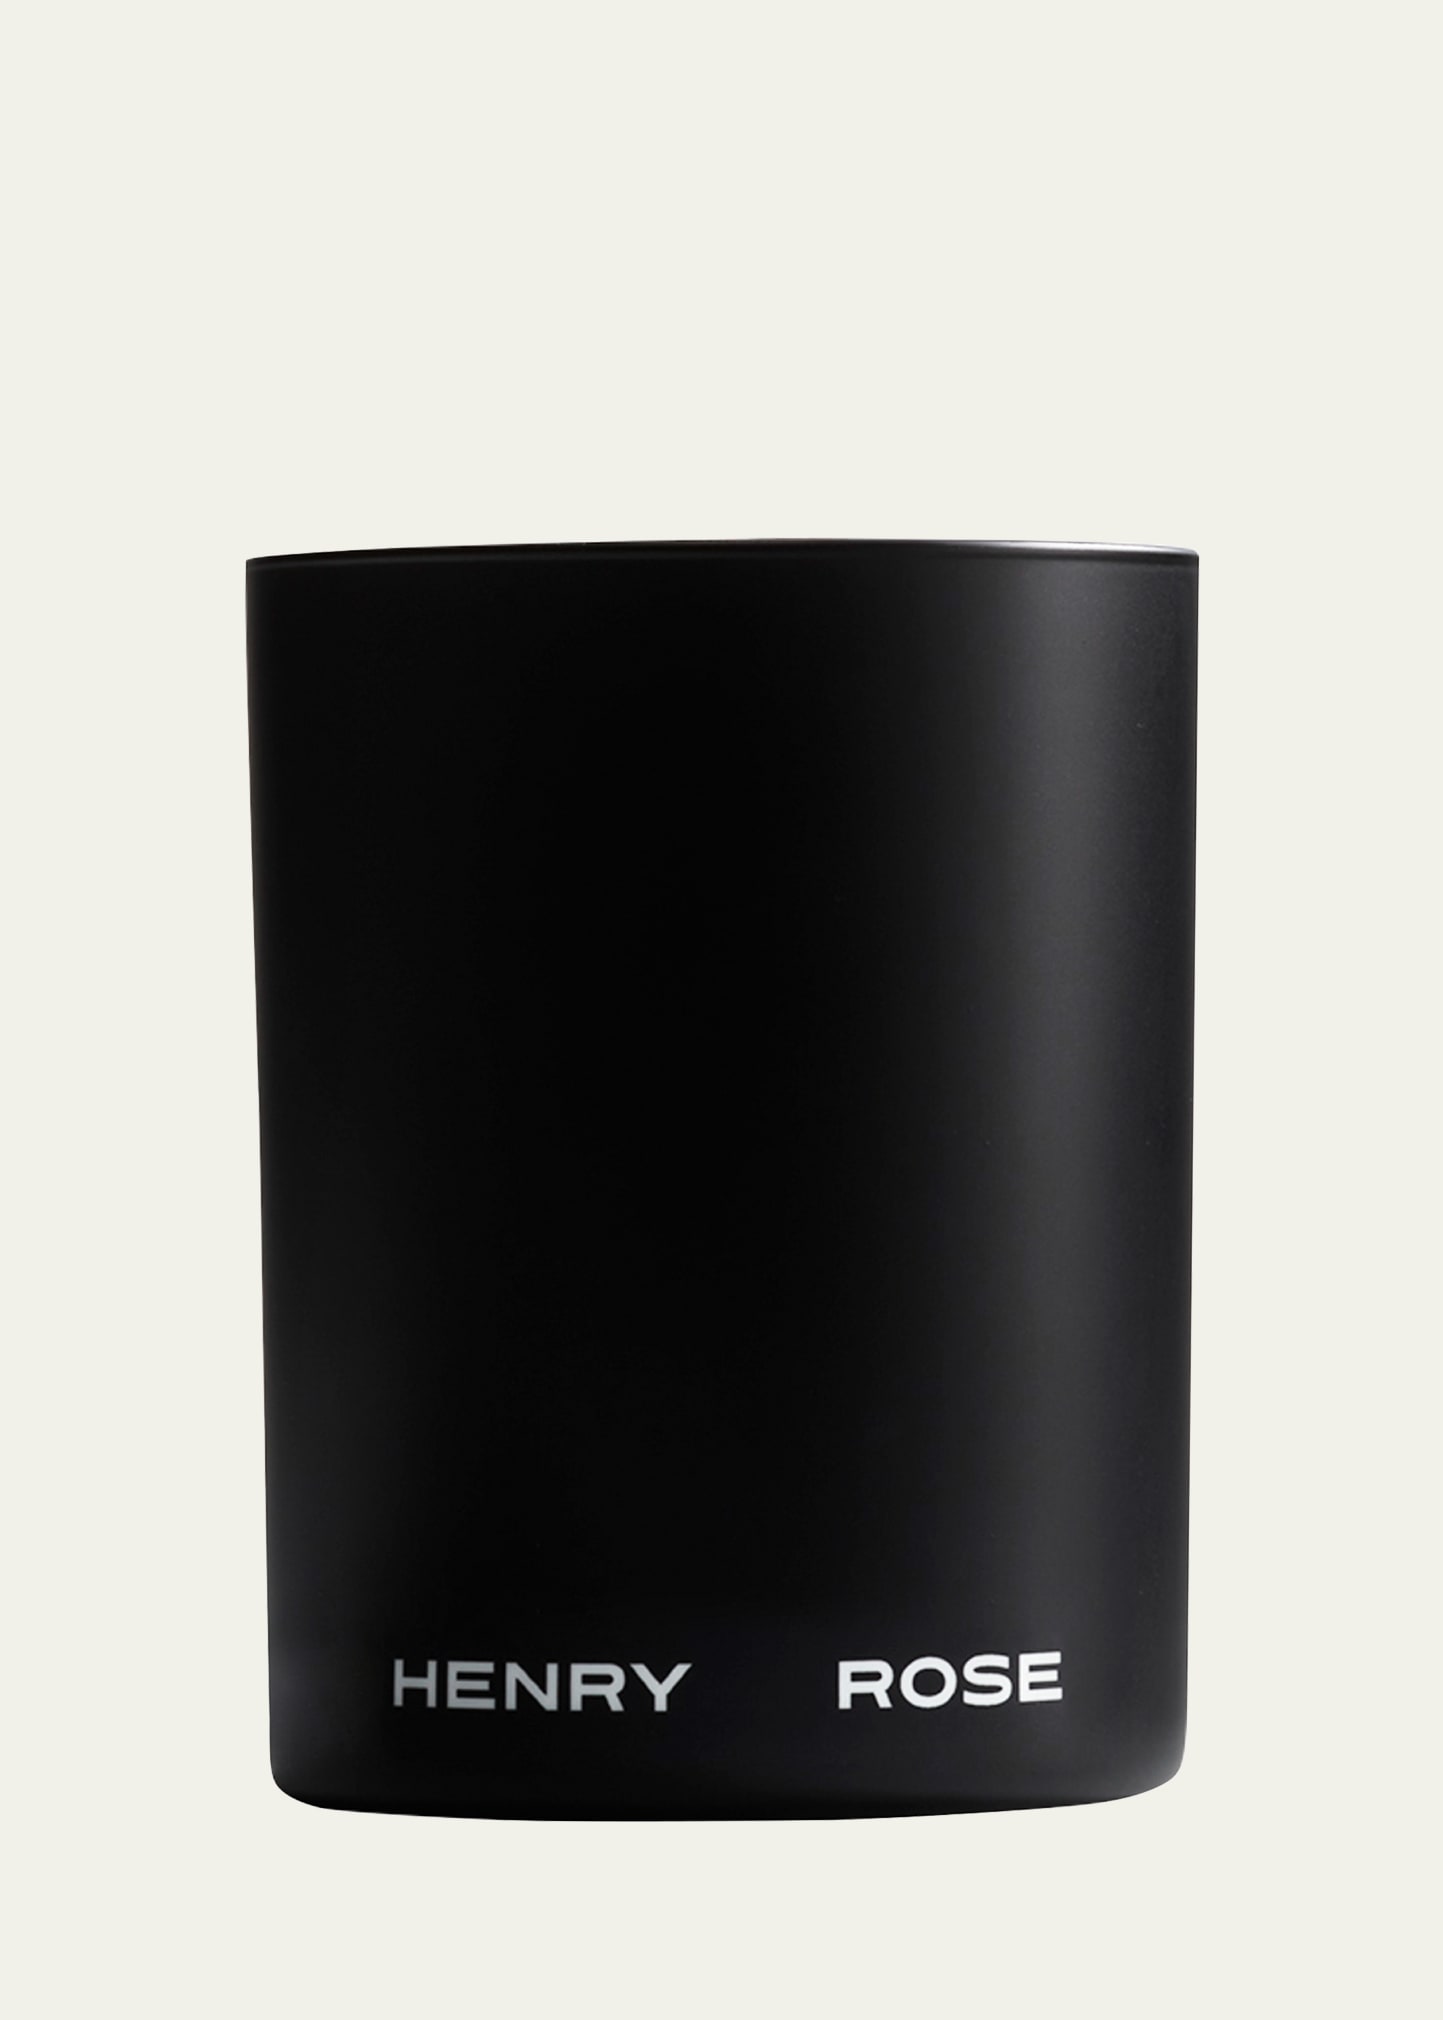 HENRY ROSE 10.6 oz. Jake's House Candle